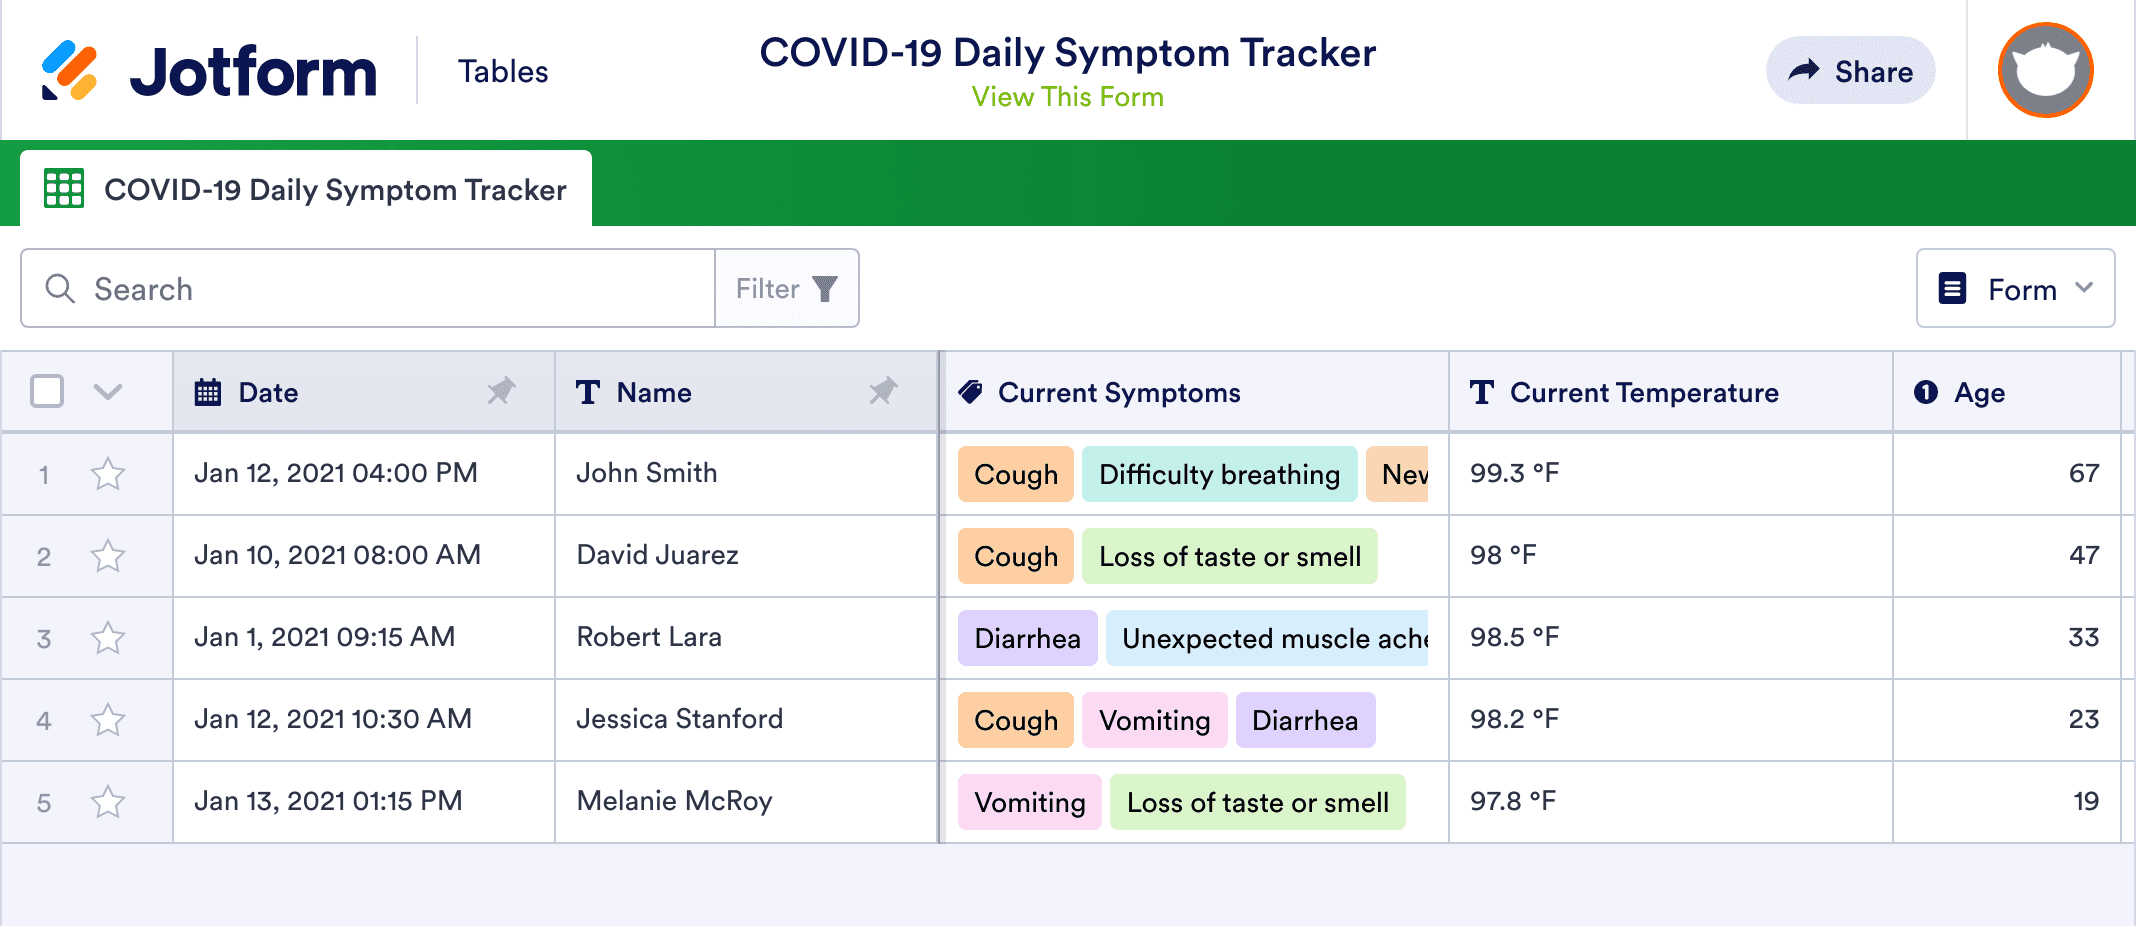 COVID-19 Daily Symptom Tracker